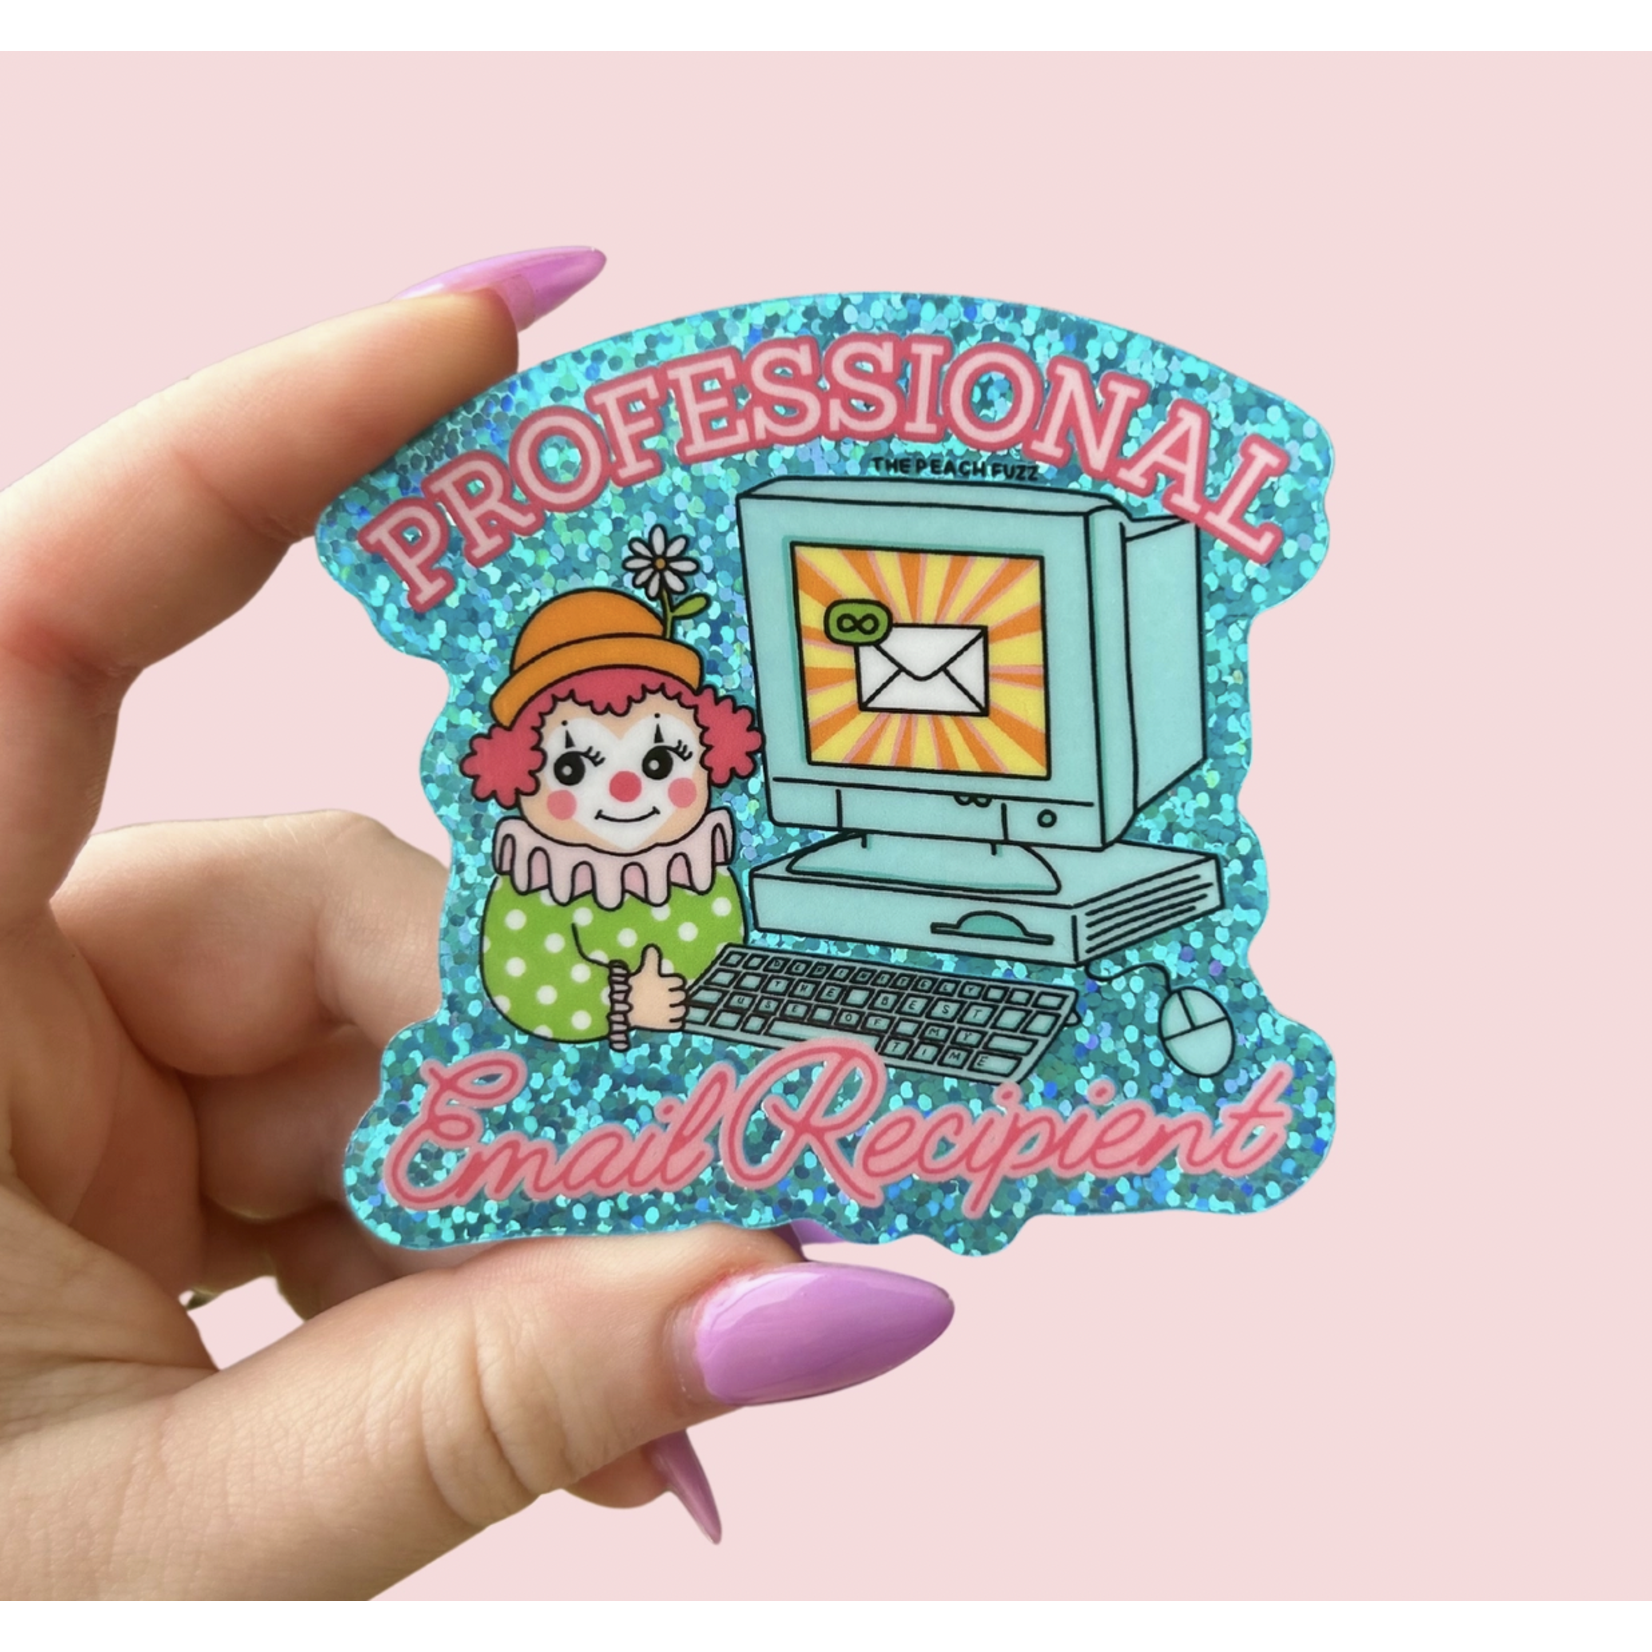 The Peach Fuzz Professional Email Recipient Glitter Sticker